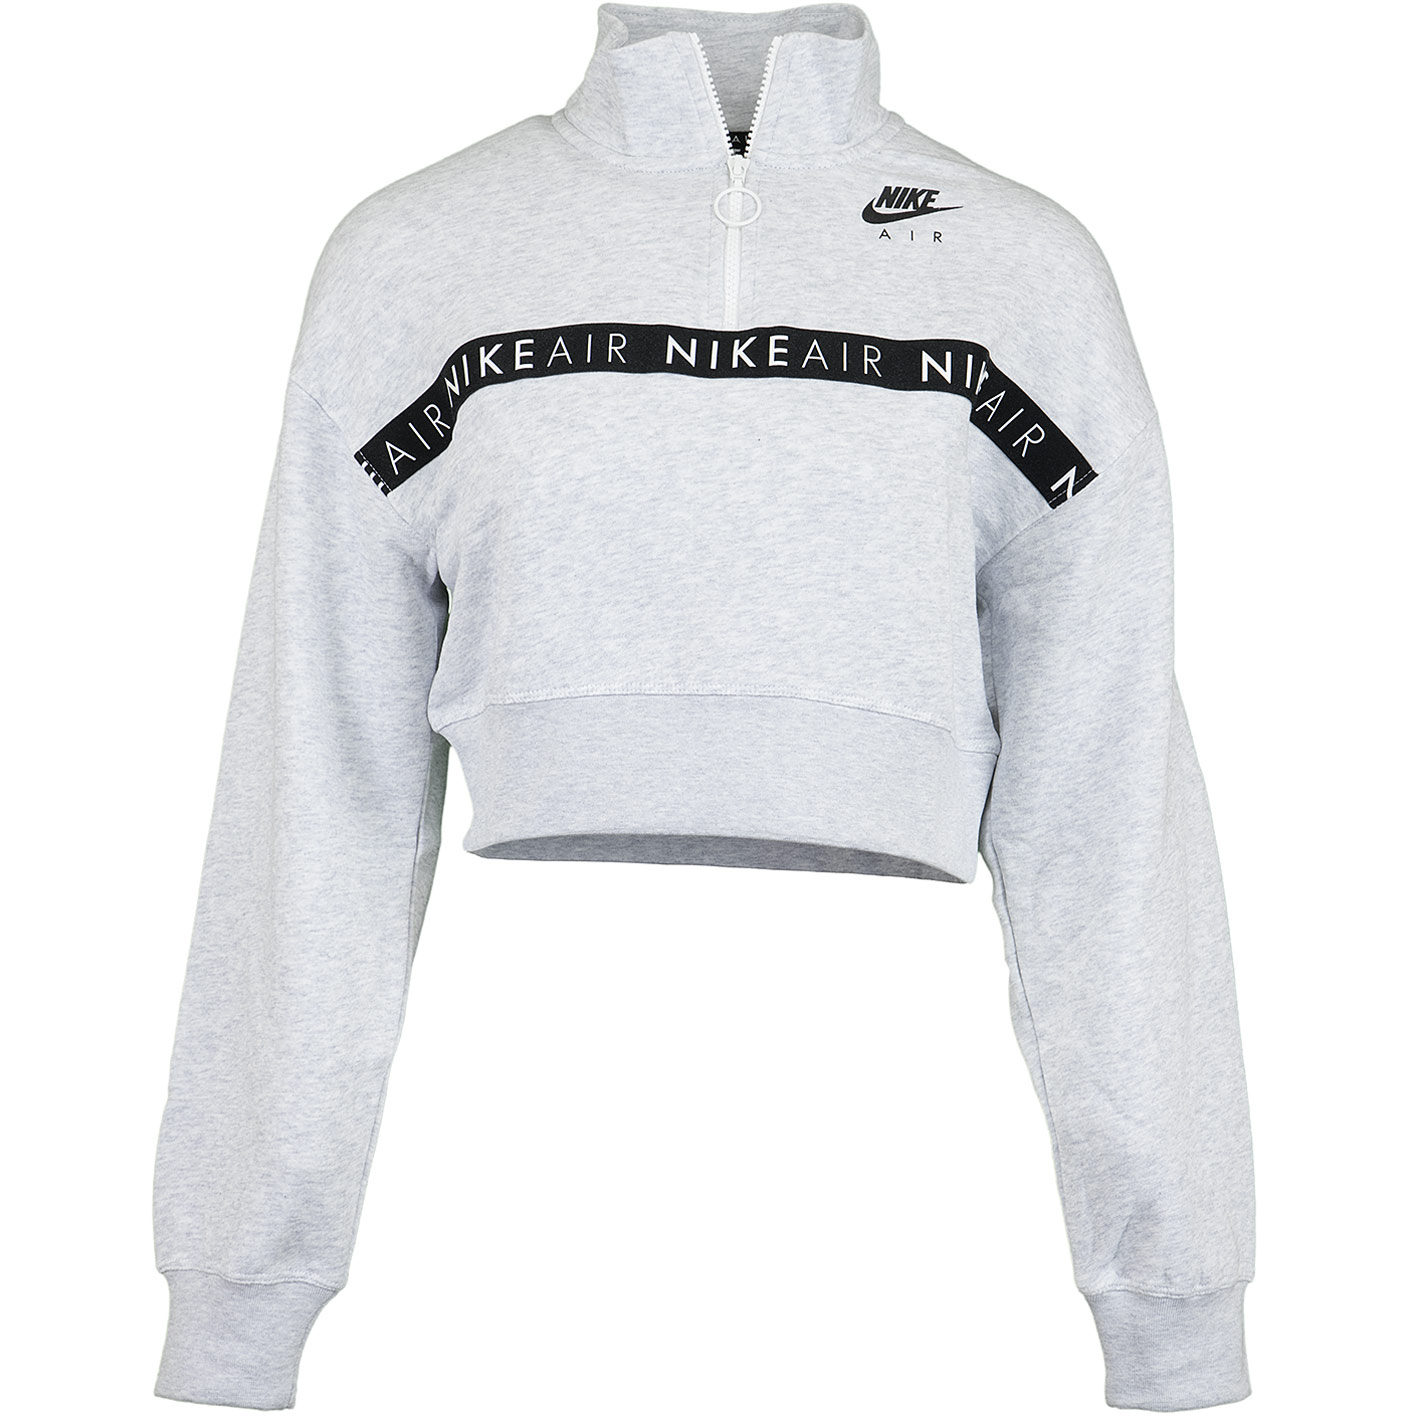 ☆ Nike Damen Sweatshirt Air HZ hell grau - hier bestellen!